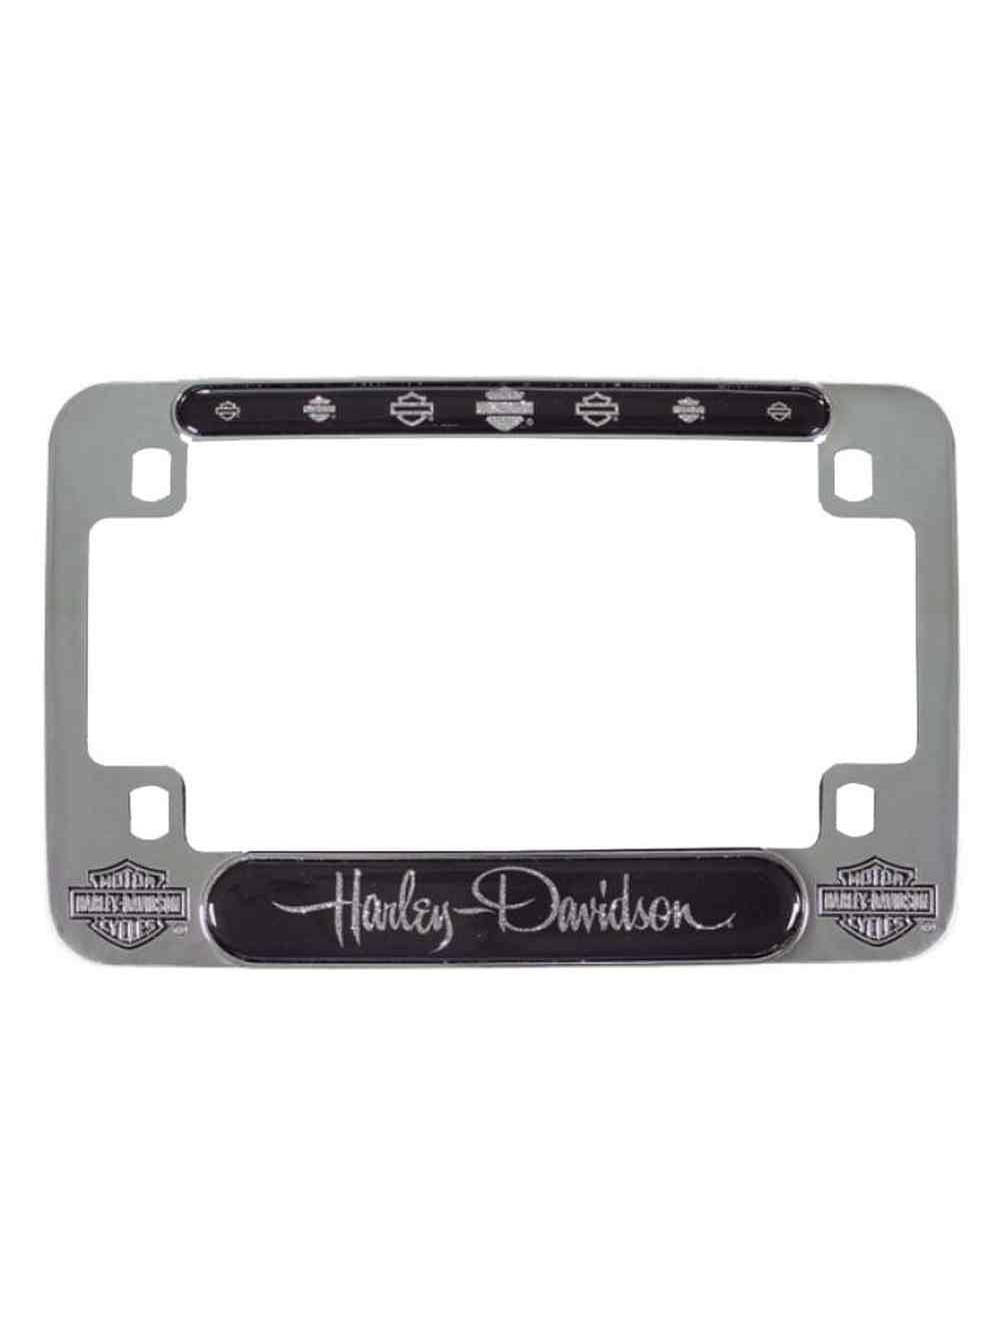 harley davidson license plate frame for motorcycle